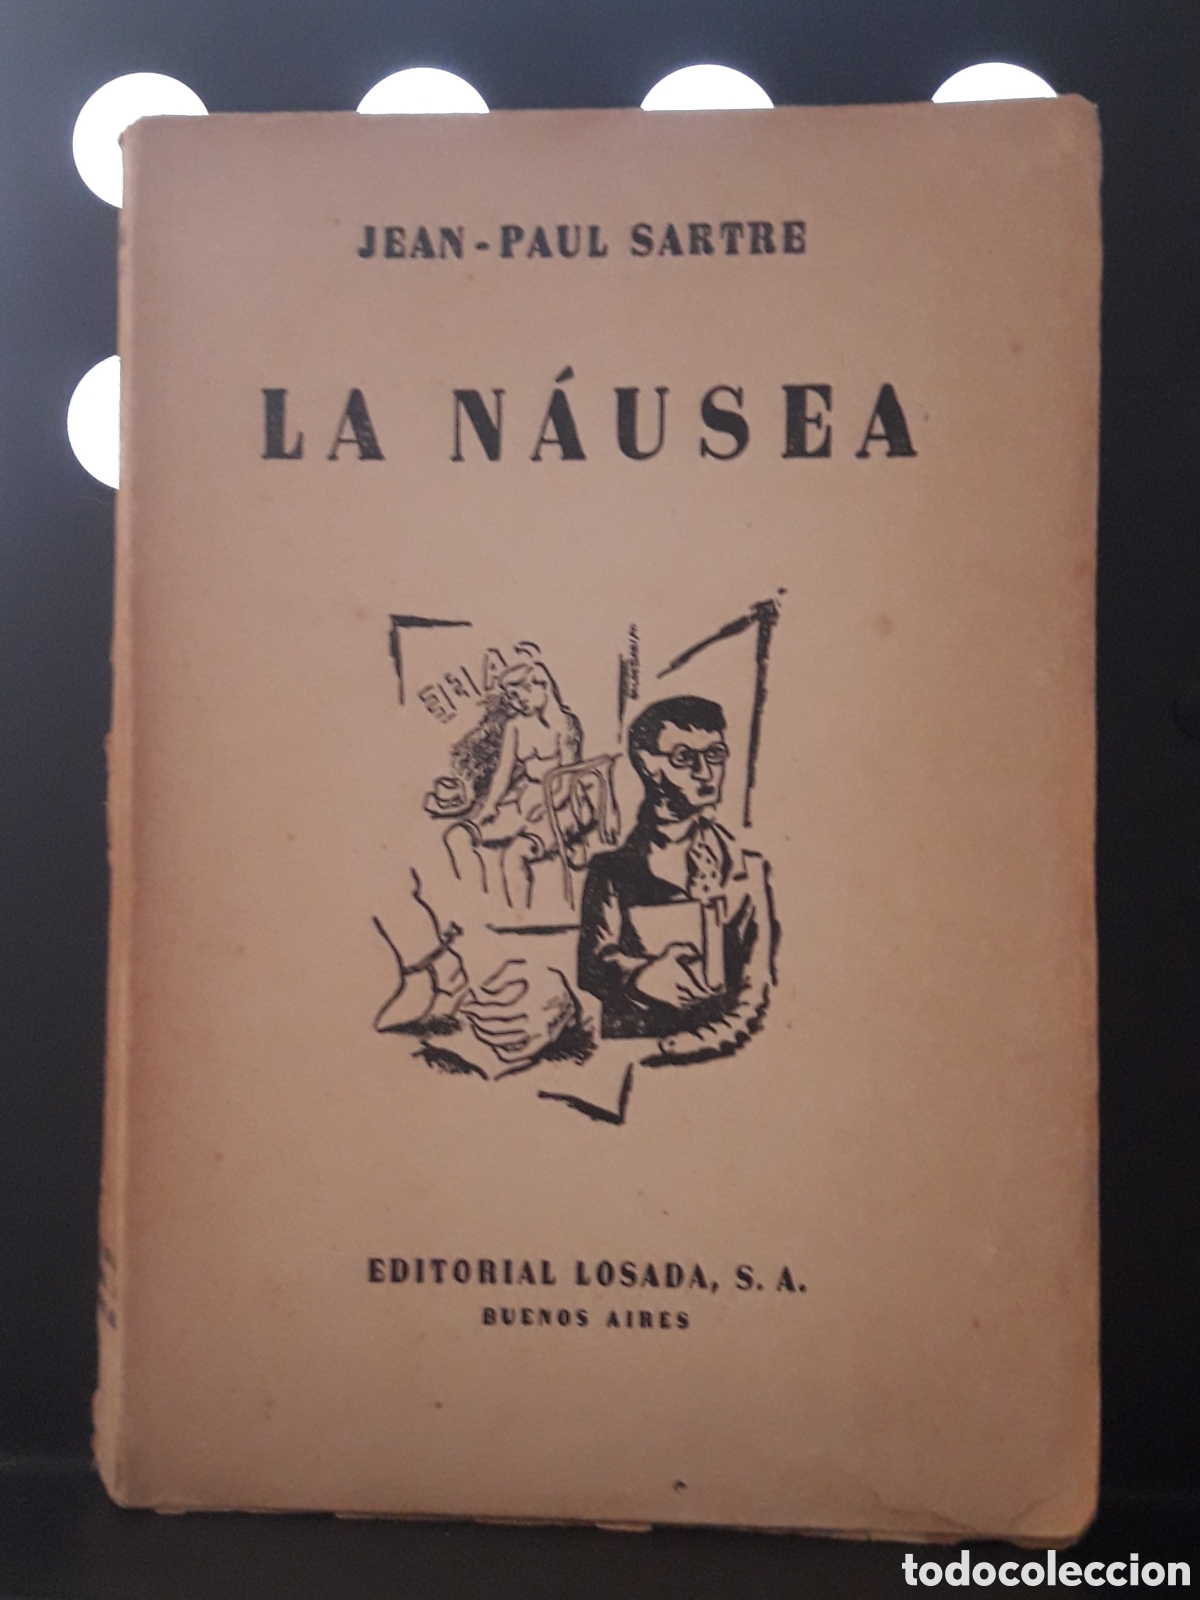 la náusea, jean paul sartre - Buy Used books about philosophy on  todocoleccion